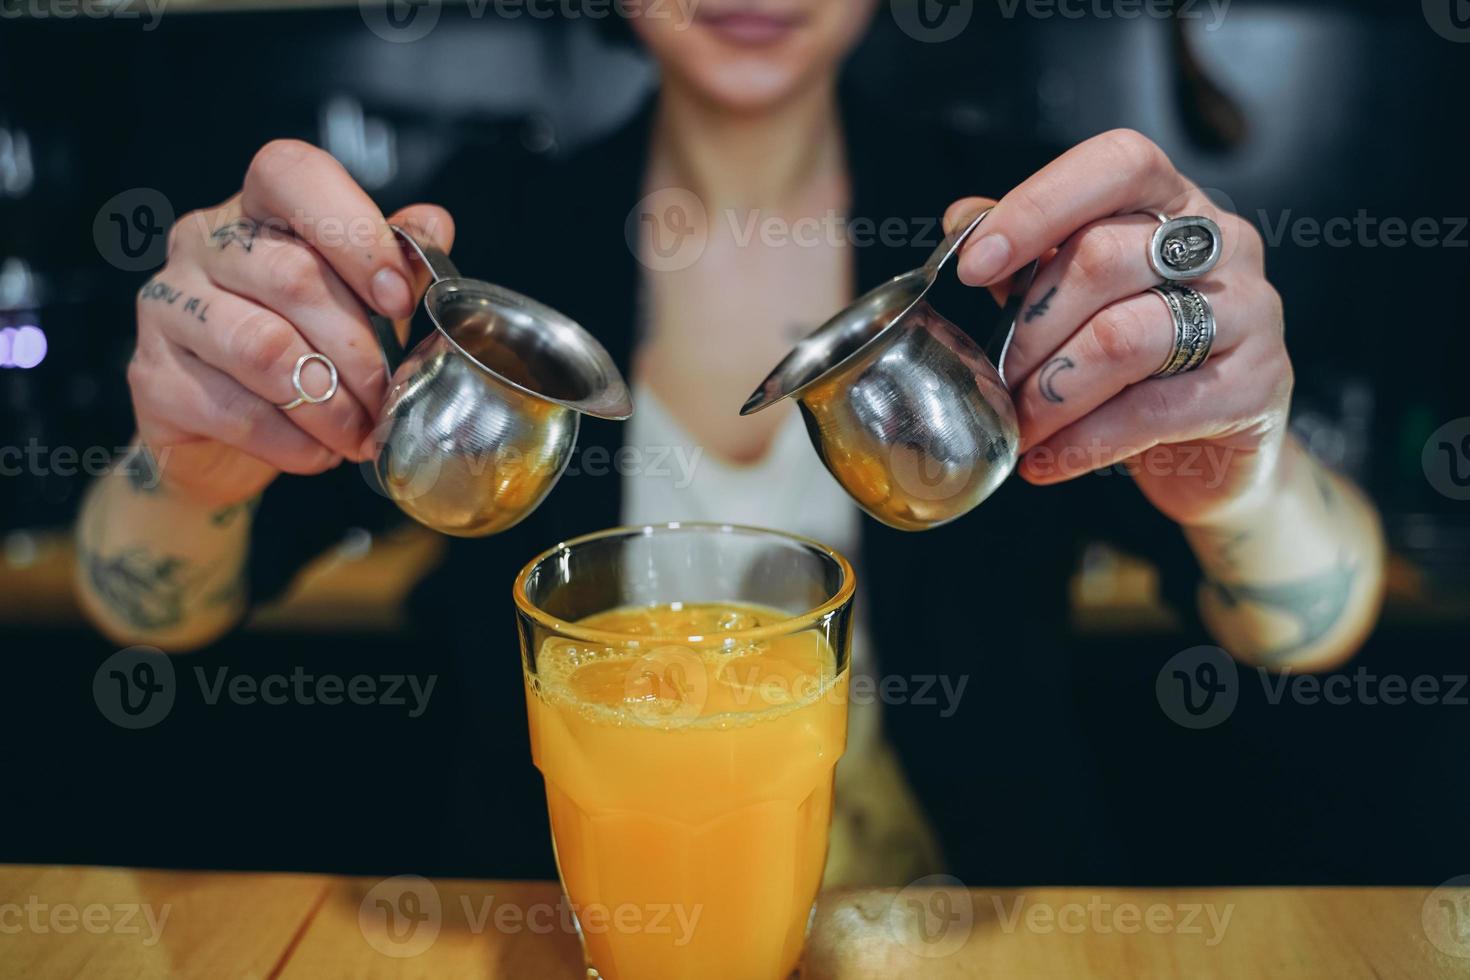 kiev, ukraina - april 14, 2019 en flicka gör en orange kaffe cocktail foto